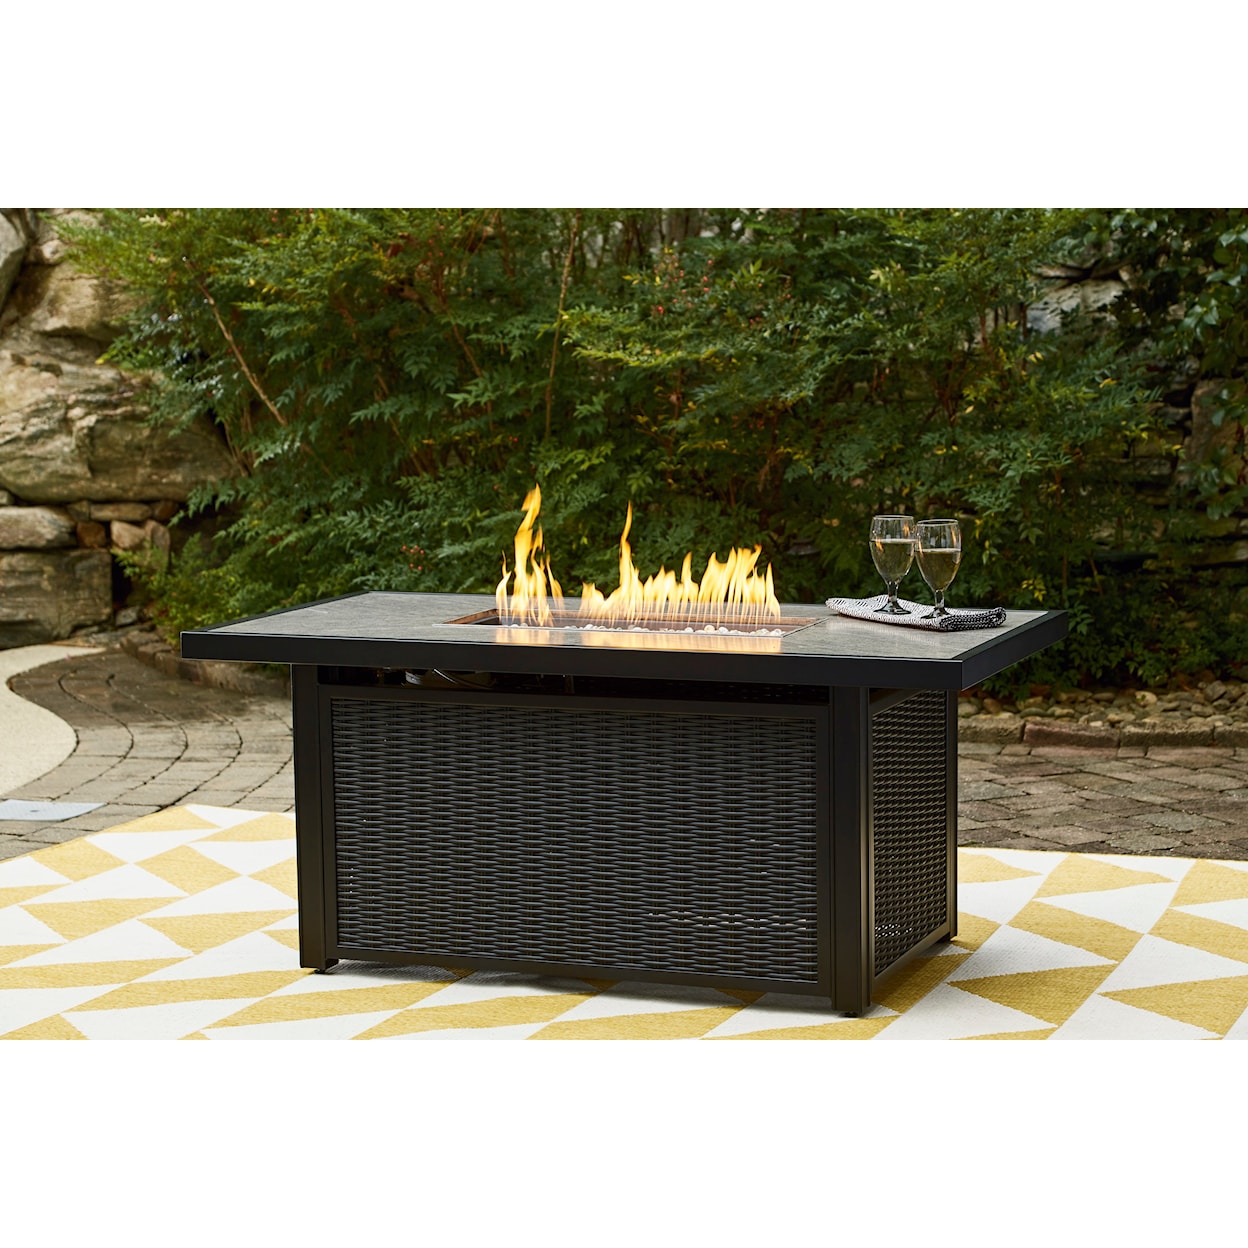 Ashley Signature Design Beachcroft Rectangular Fire Pit Table